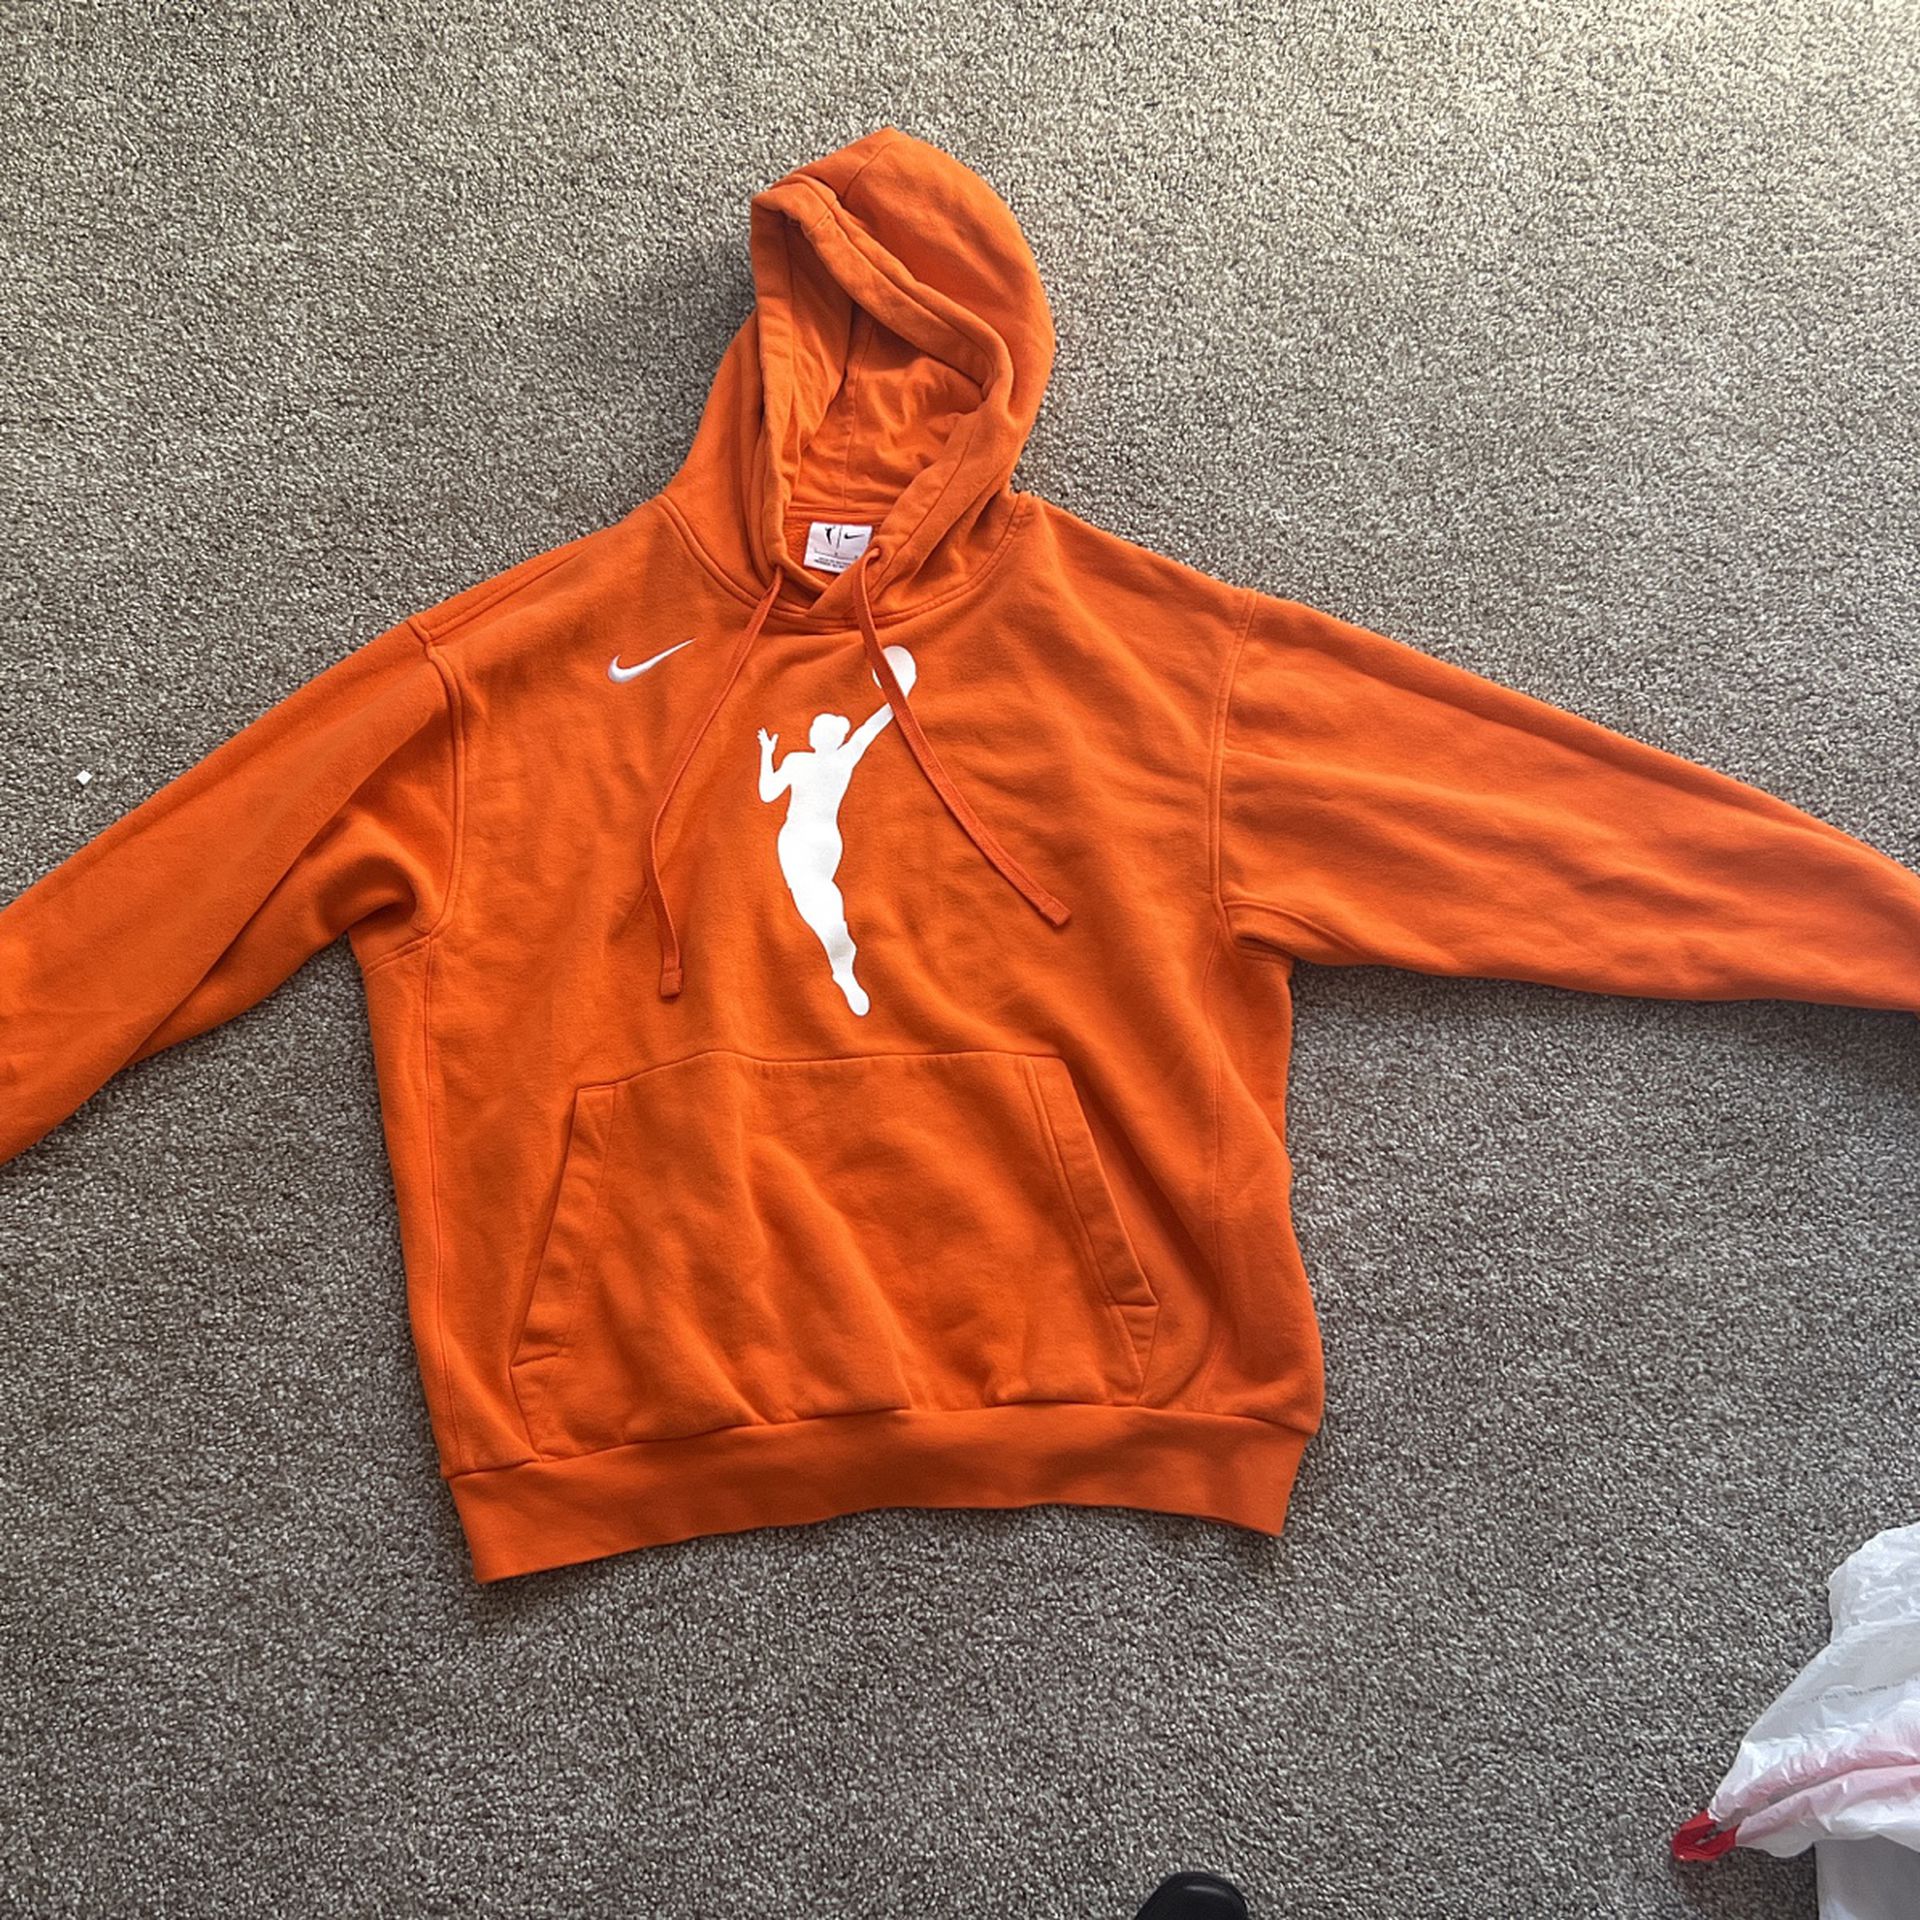 wnba orange hoodie